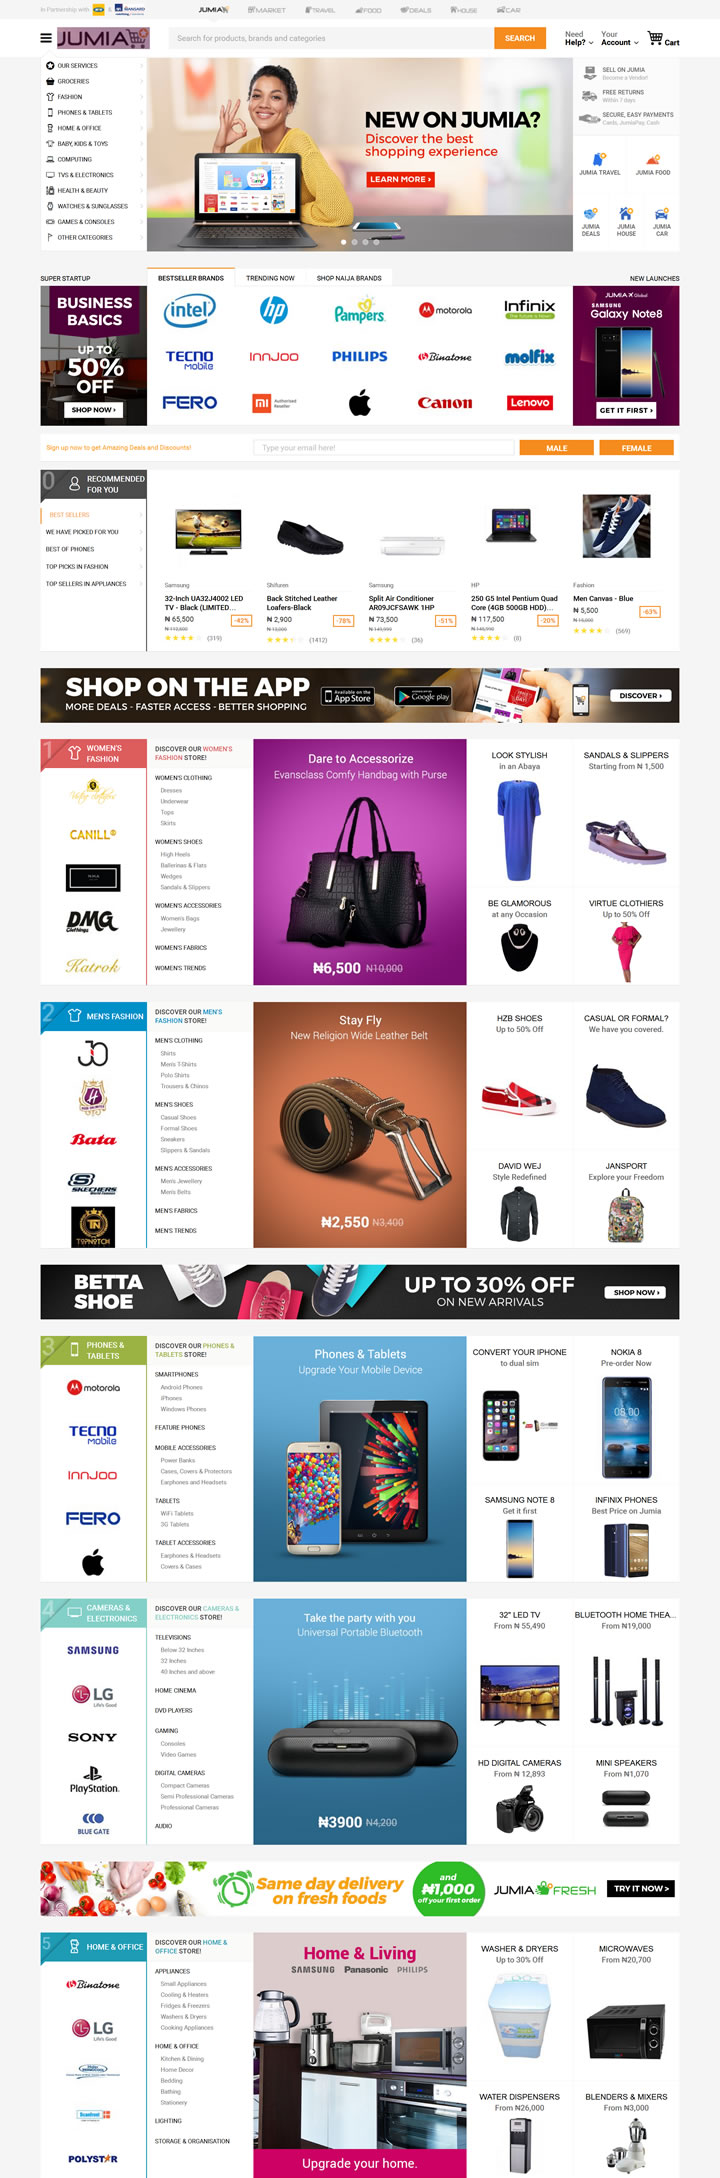 Nigeria’s Number One Online Shopping Site: Jumia Nigeria